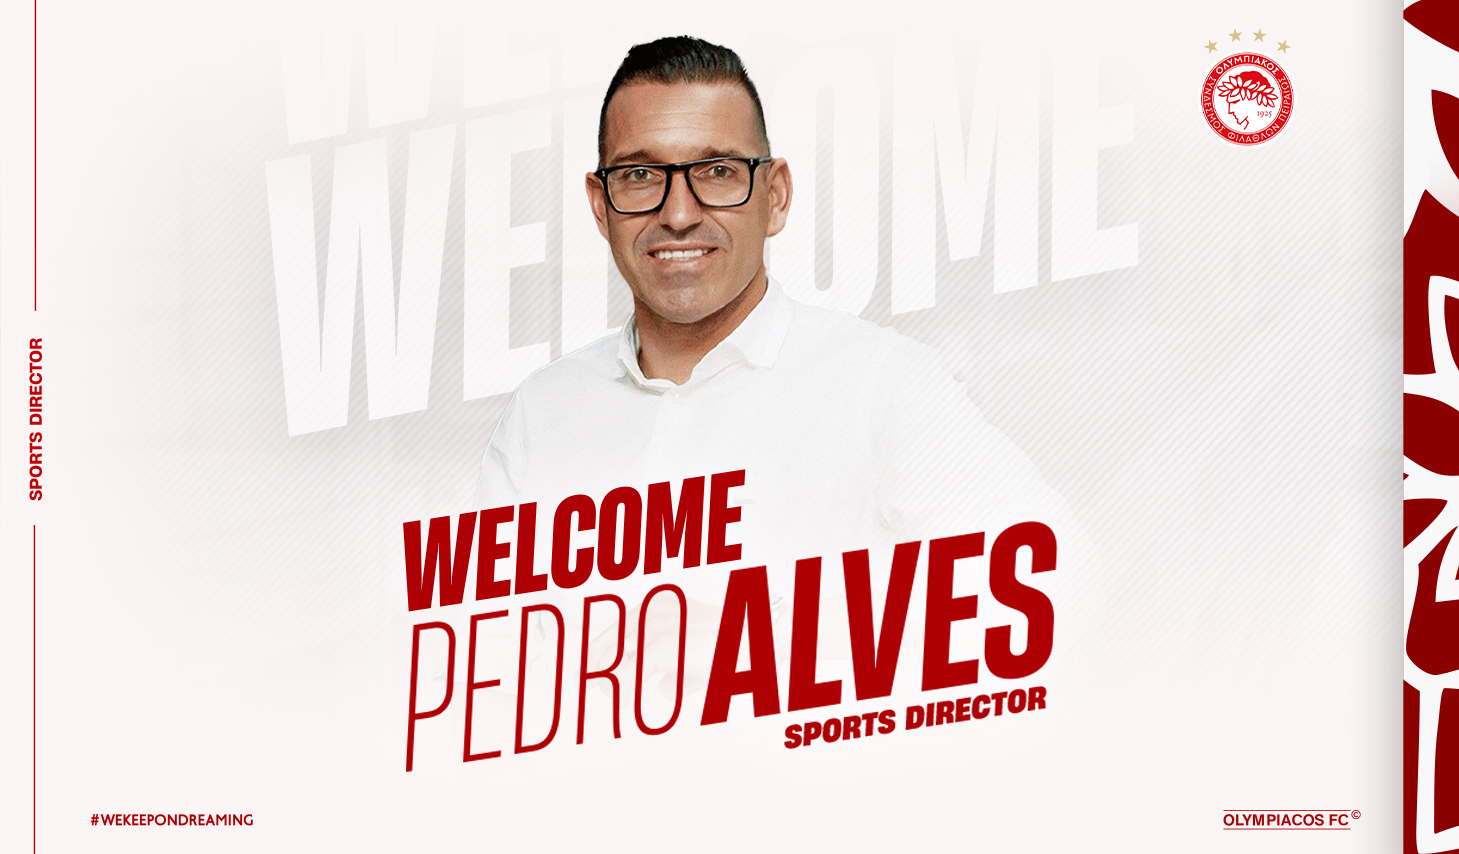 Pedro Alves rejoint l’Olympiacos